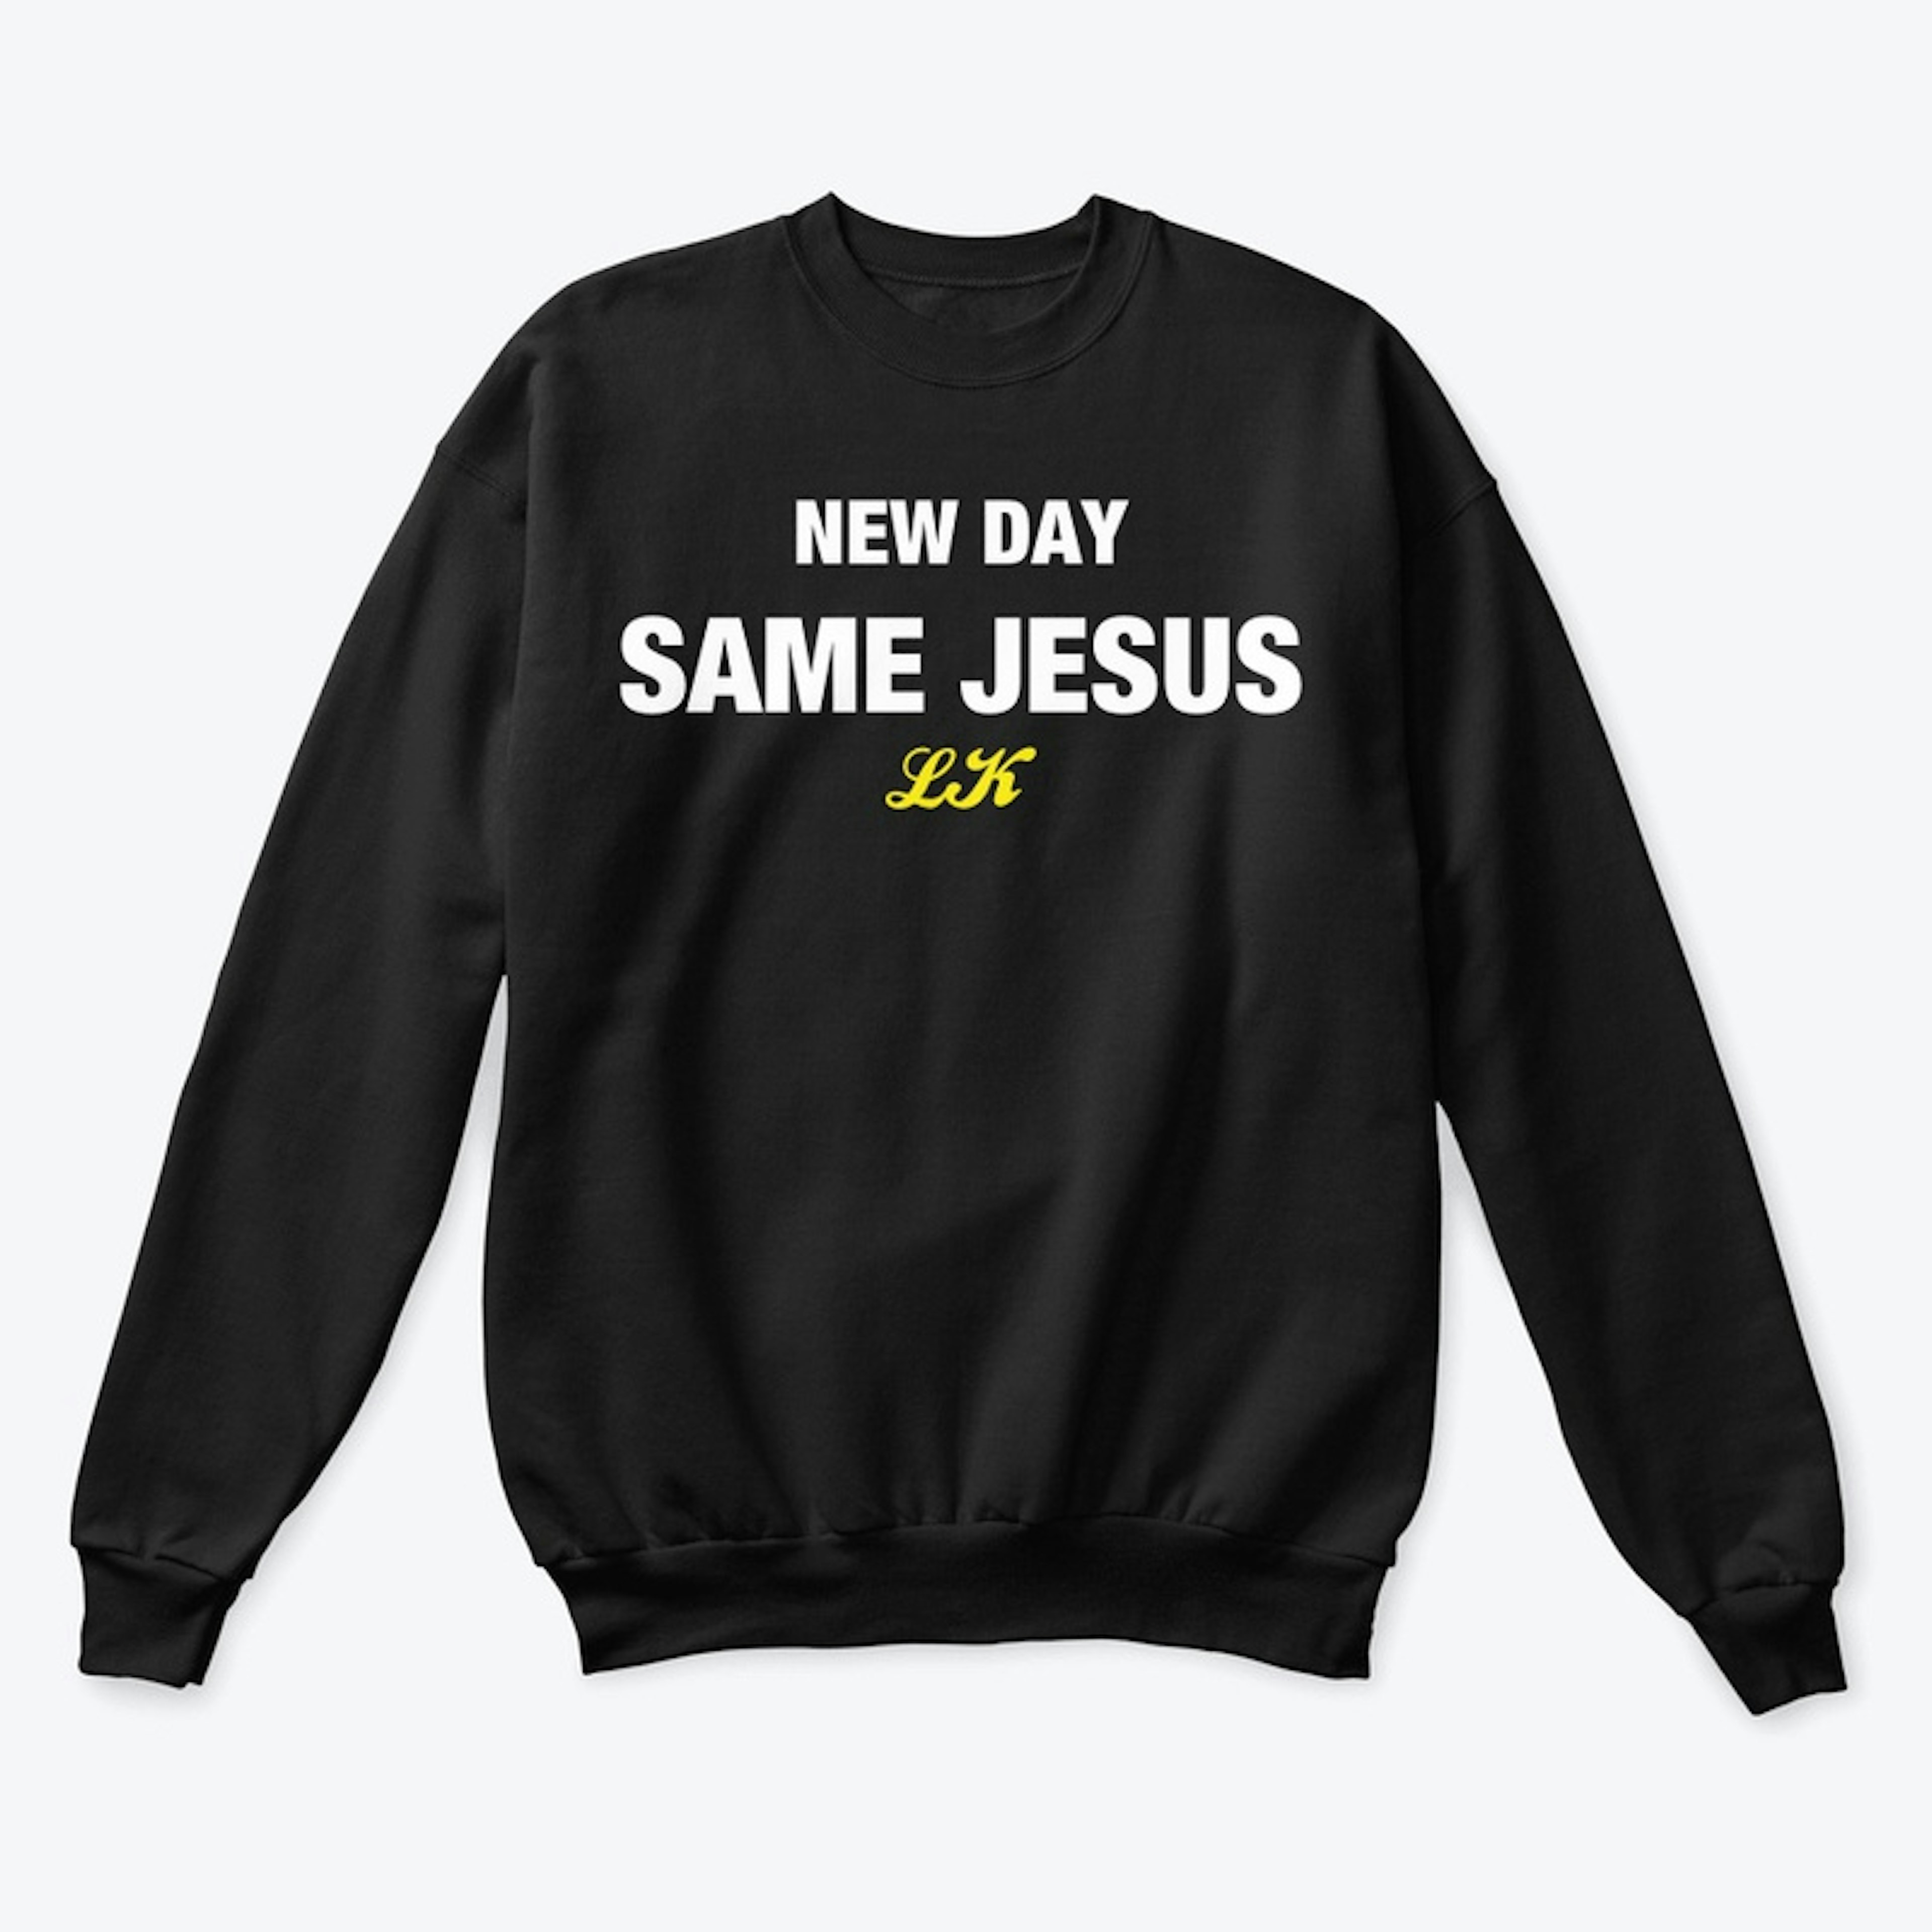 NEW DAY, SAME JESUS by LK